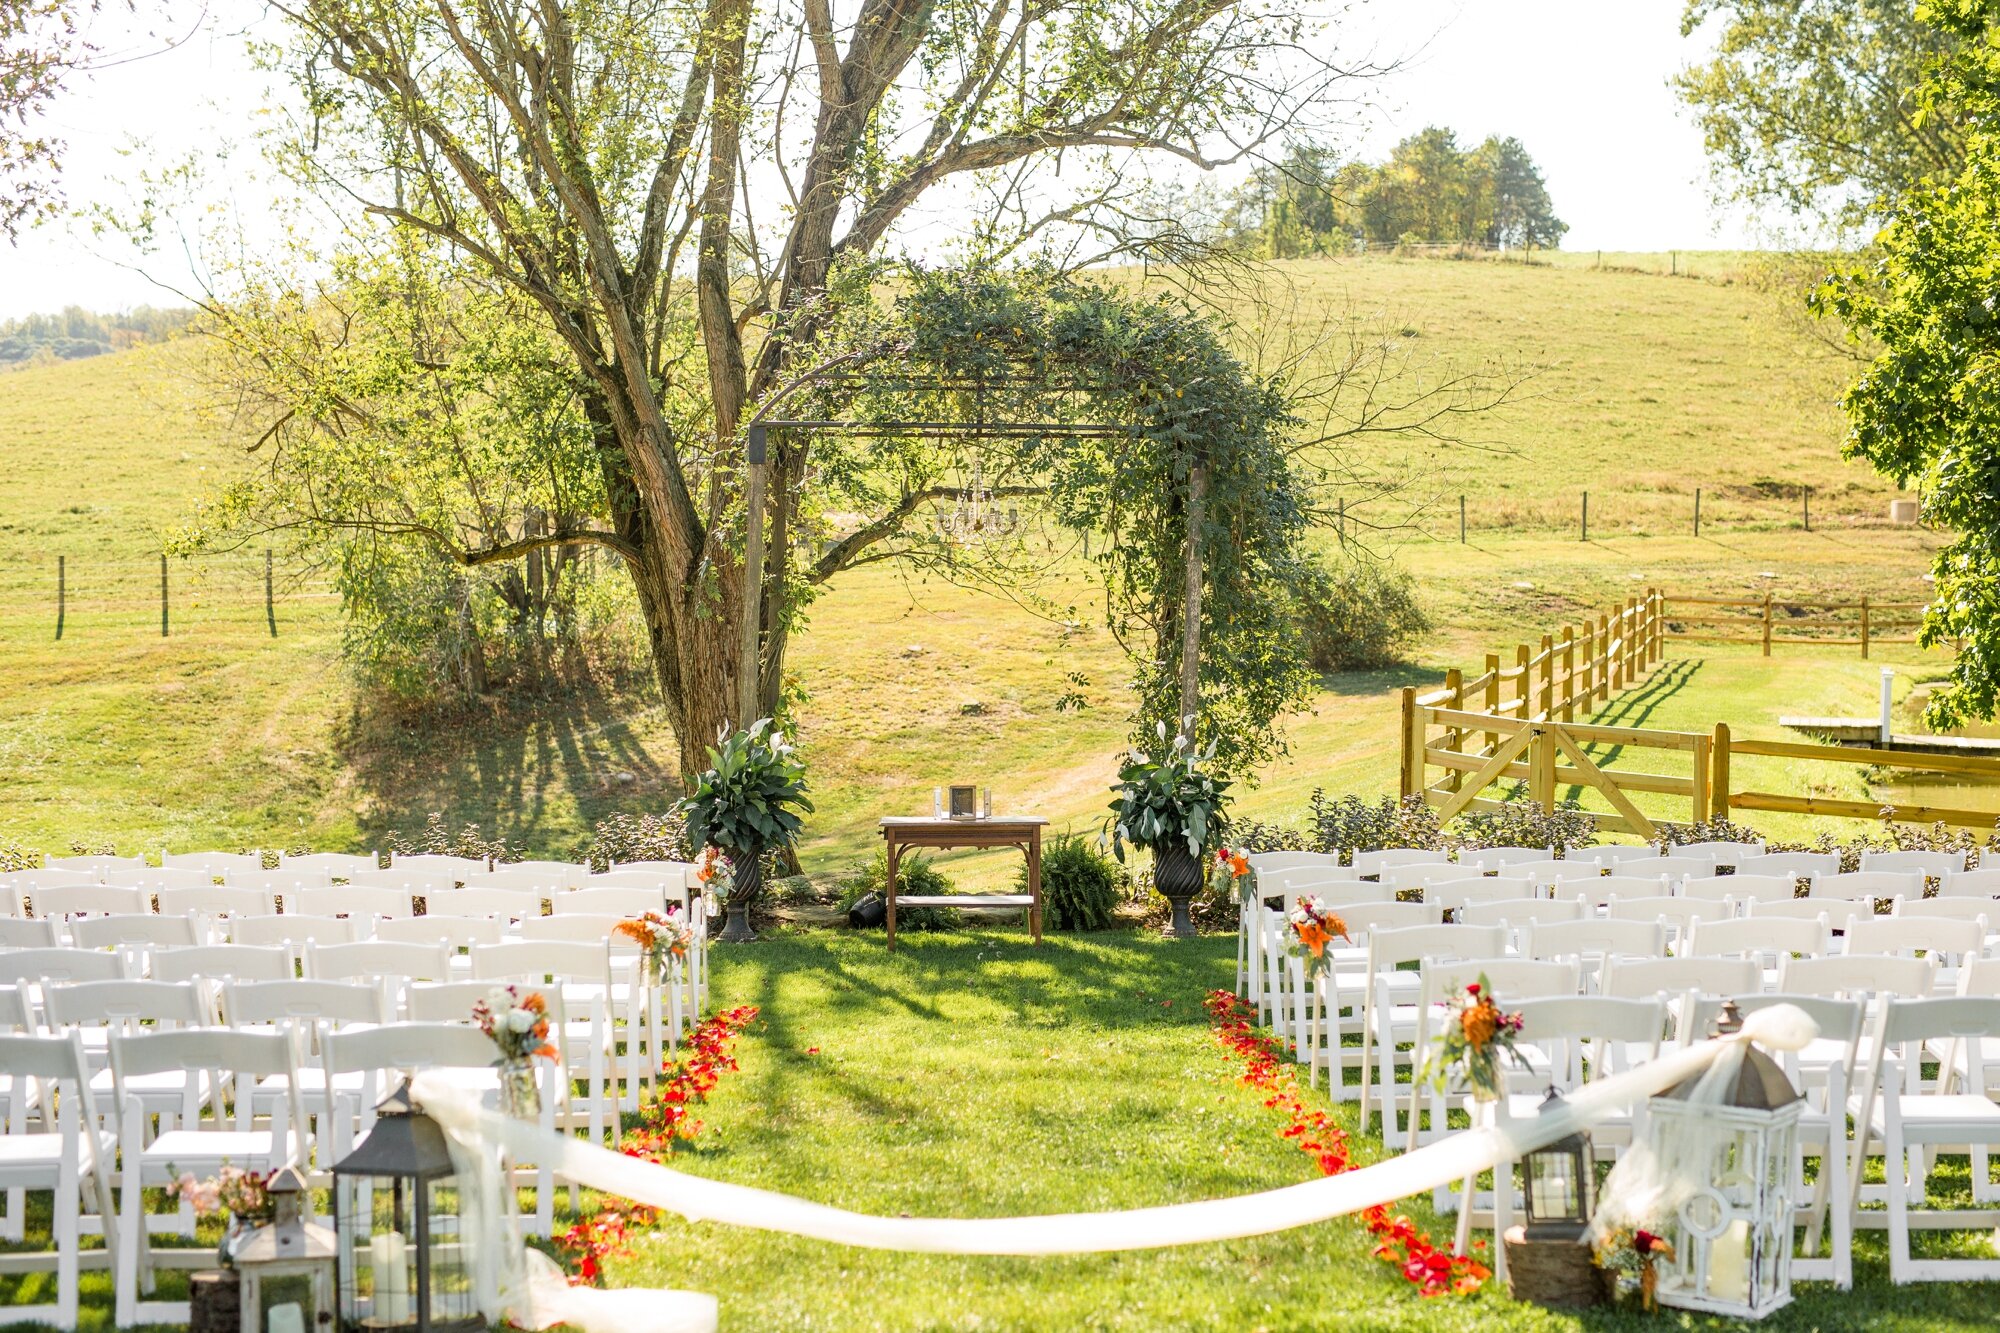 shady elms farm wedding photos, pittsburgh wedding venues, red wedding inspiration, farm wedding venues pittsburgh, hickory pa wedding venues, pittsburgh wedding photographer